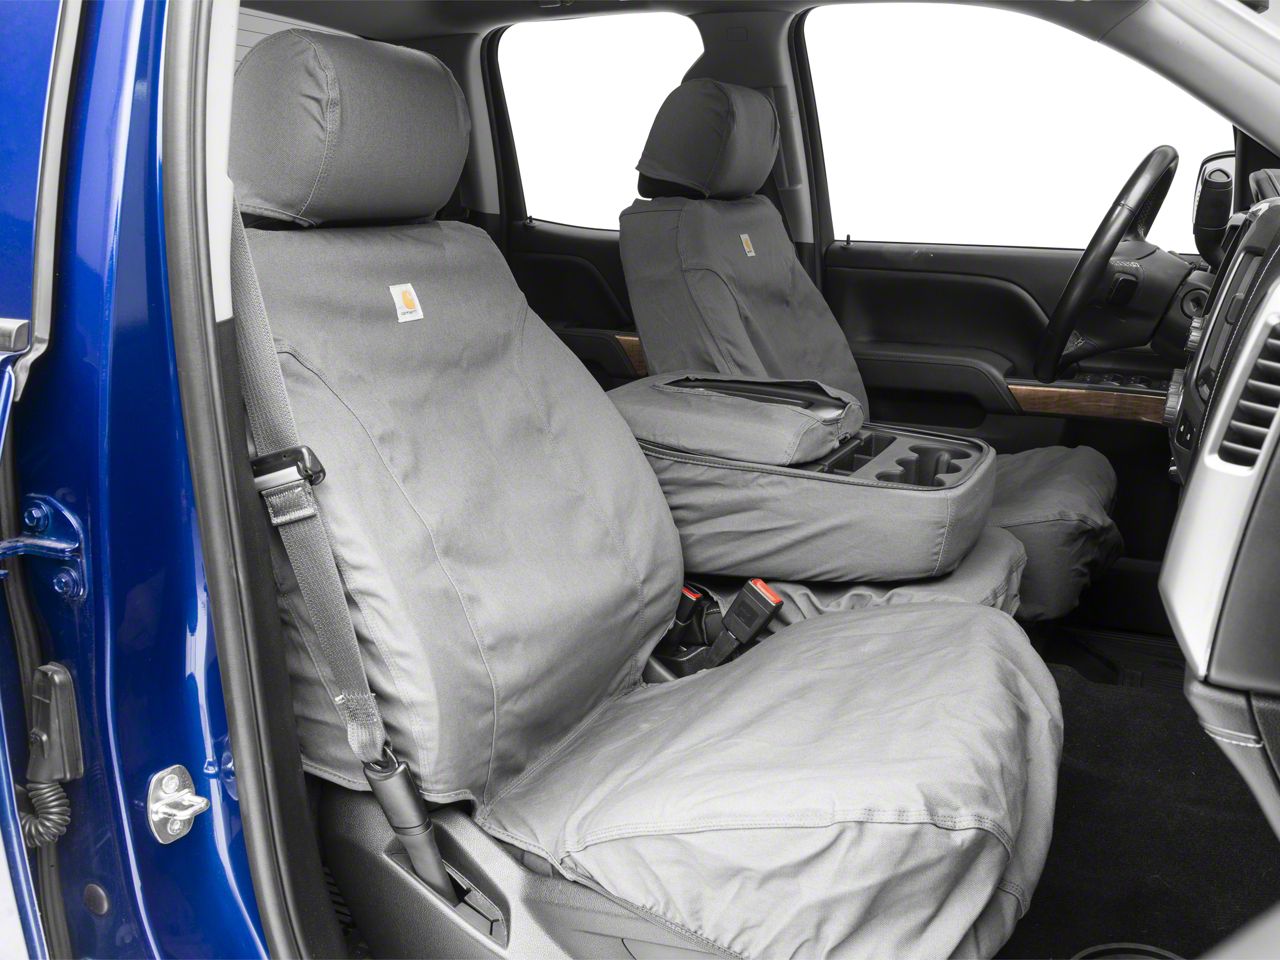 Covercraft Silverado Carhartt Seat Saver Front Covers Gravel S103818 14 18 1500 W Bench - Carhartt Seat Covers 2008 Chevy Silverado